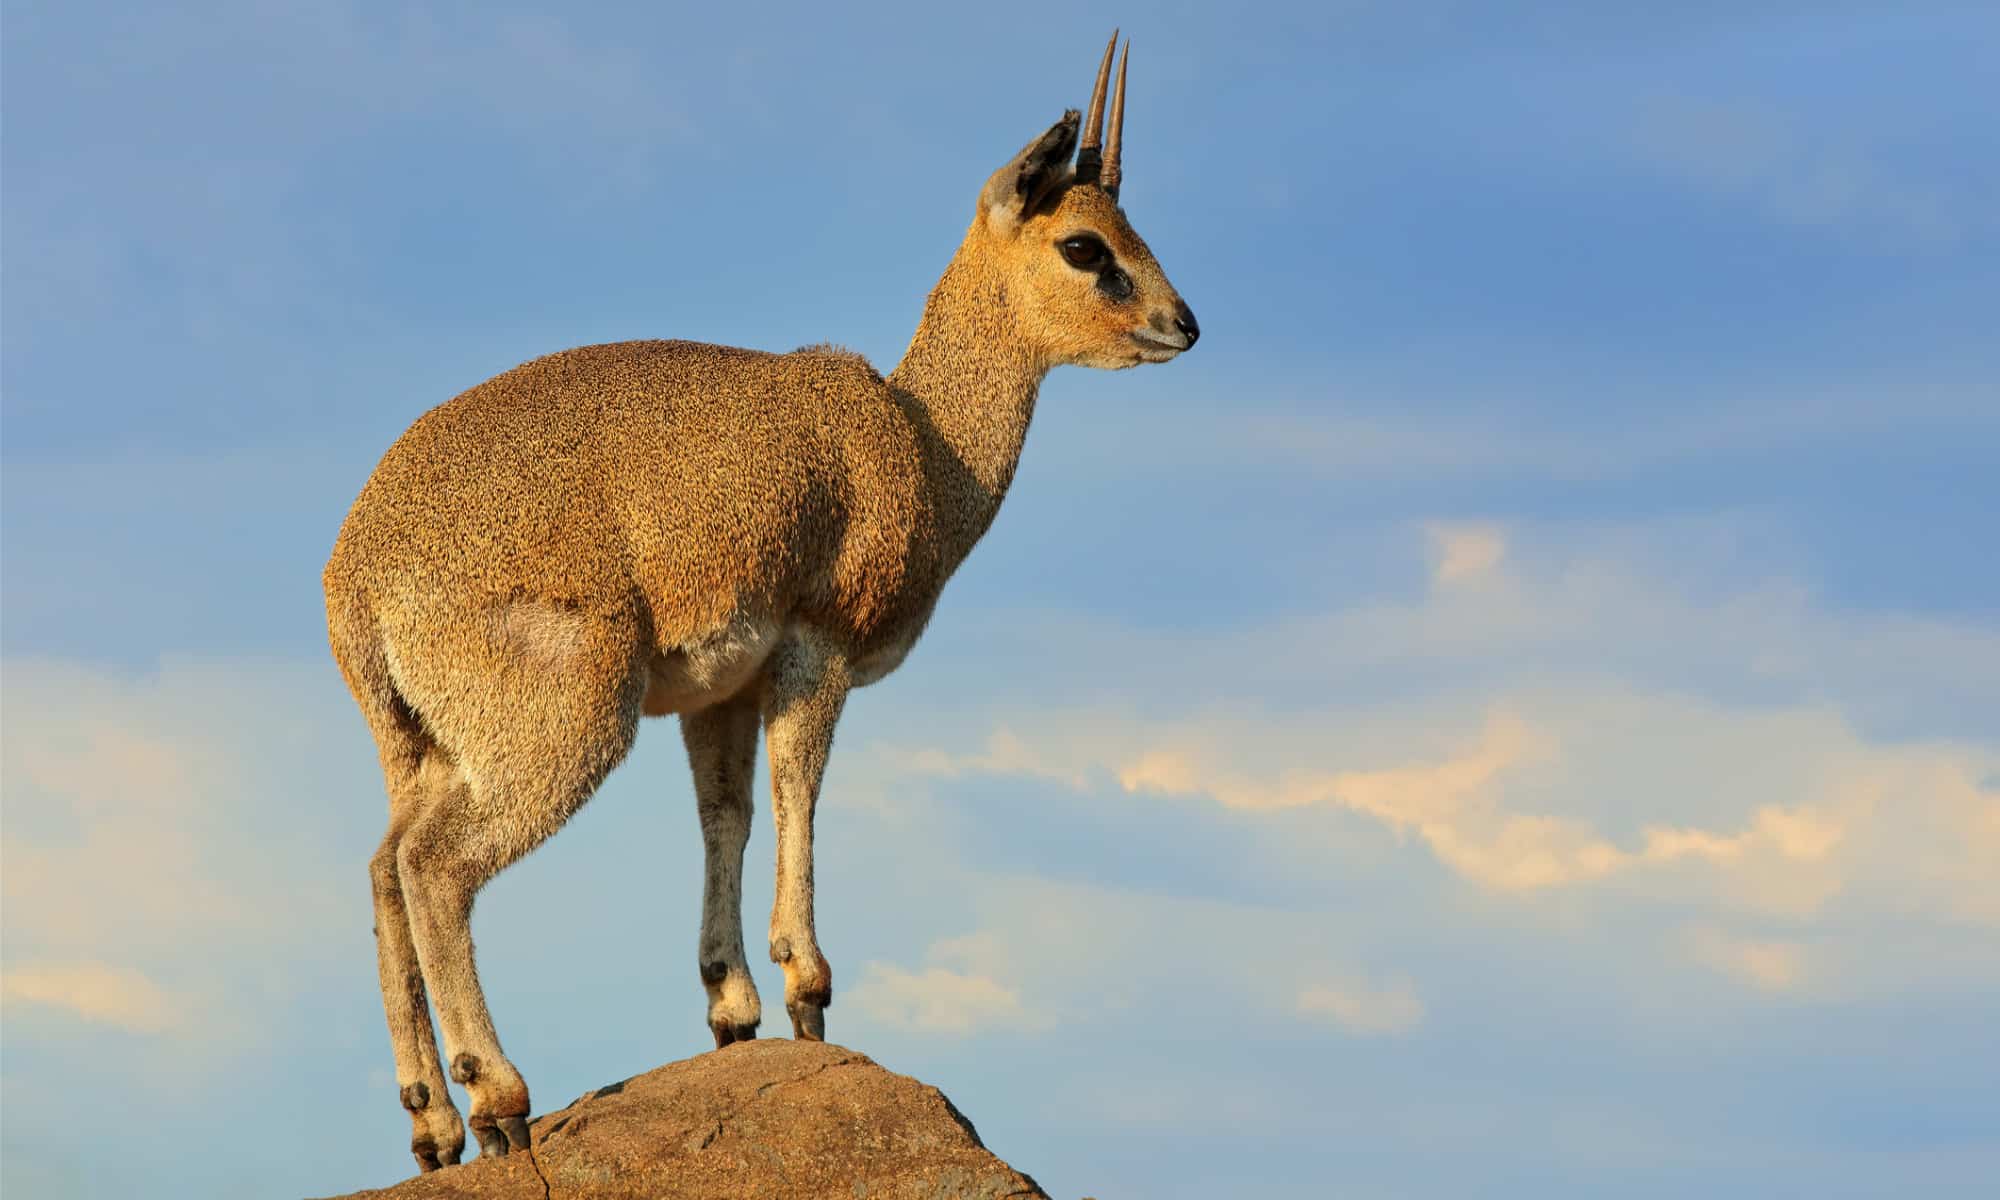 A klipspringer antelope standing on a rock